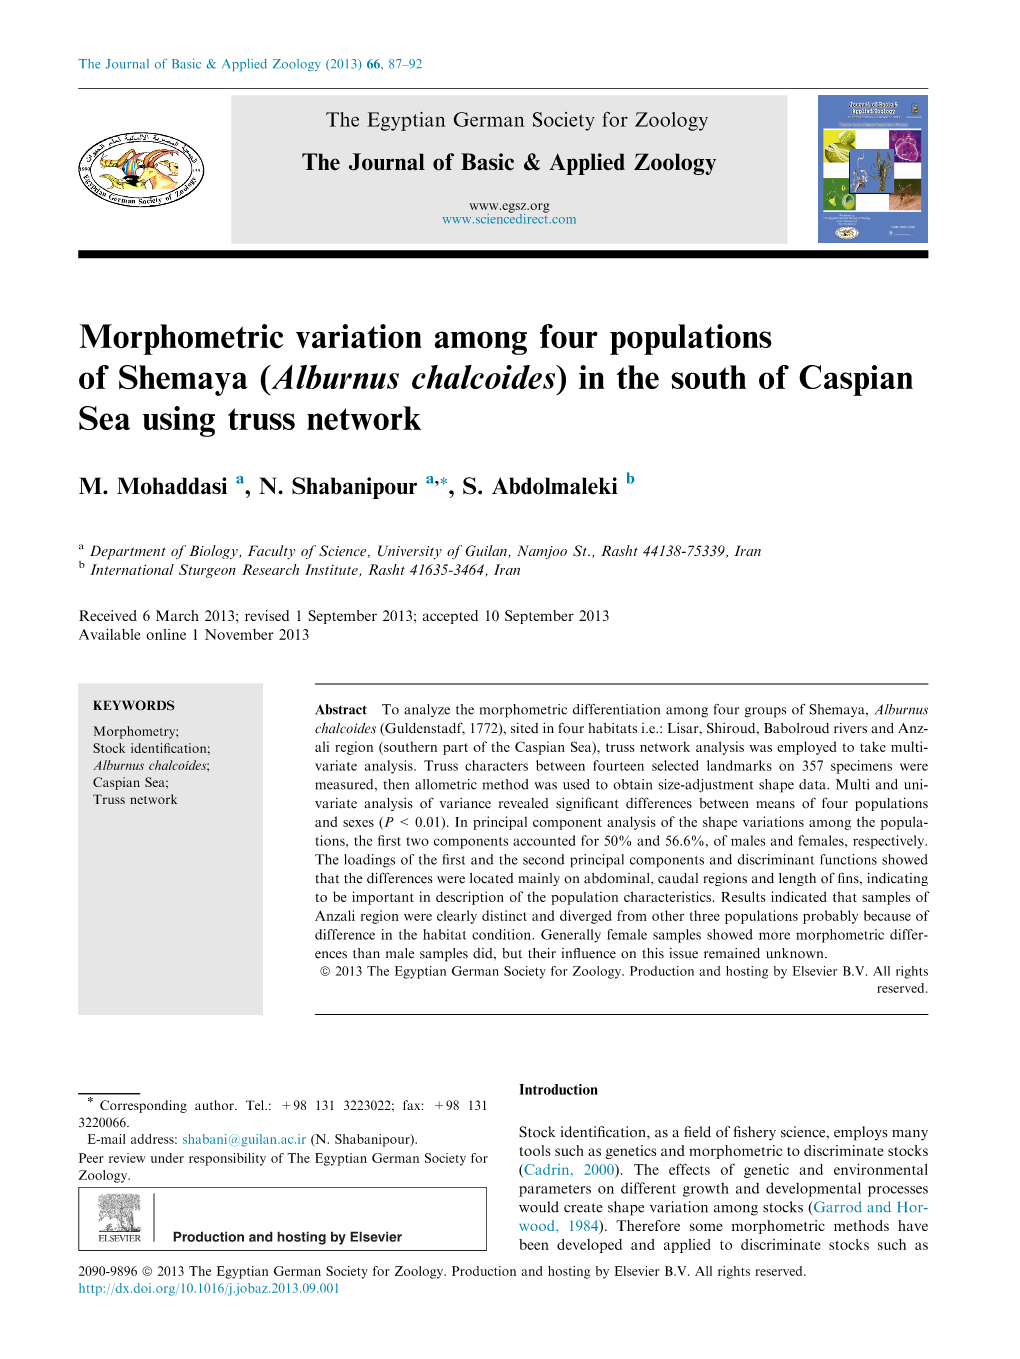 Alburnus Chalcoides) in the South of Caspian Sea Using Truss Network